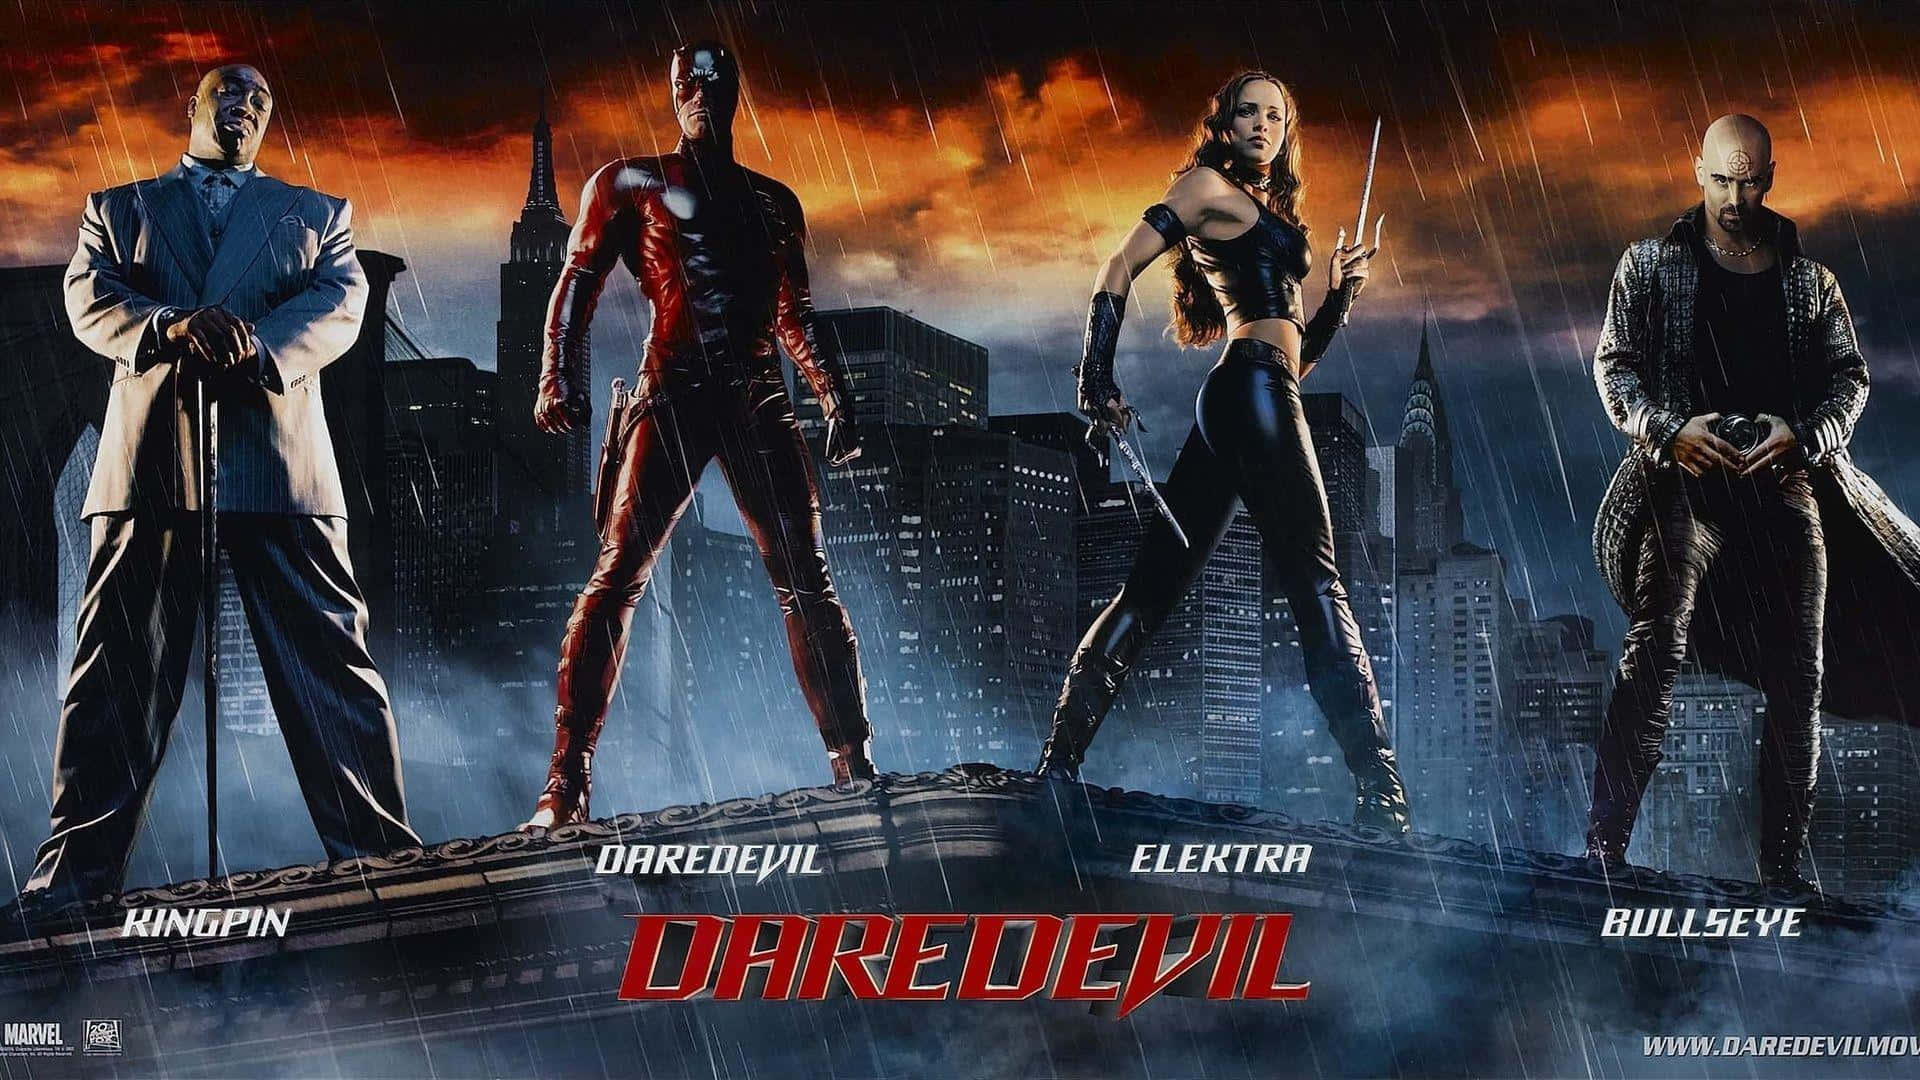 The Cast Of The Movie Daredevil